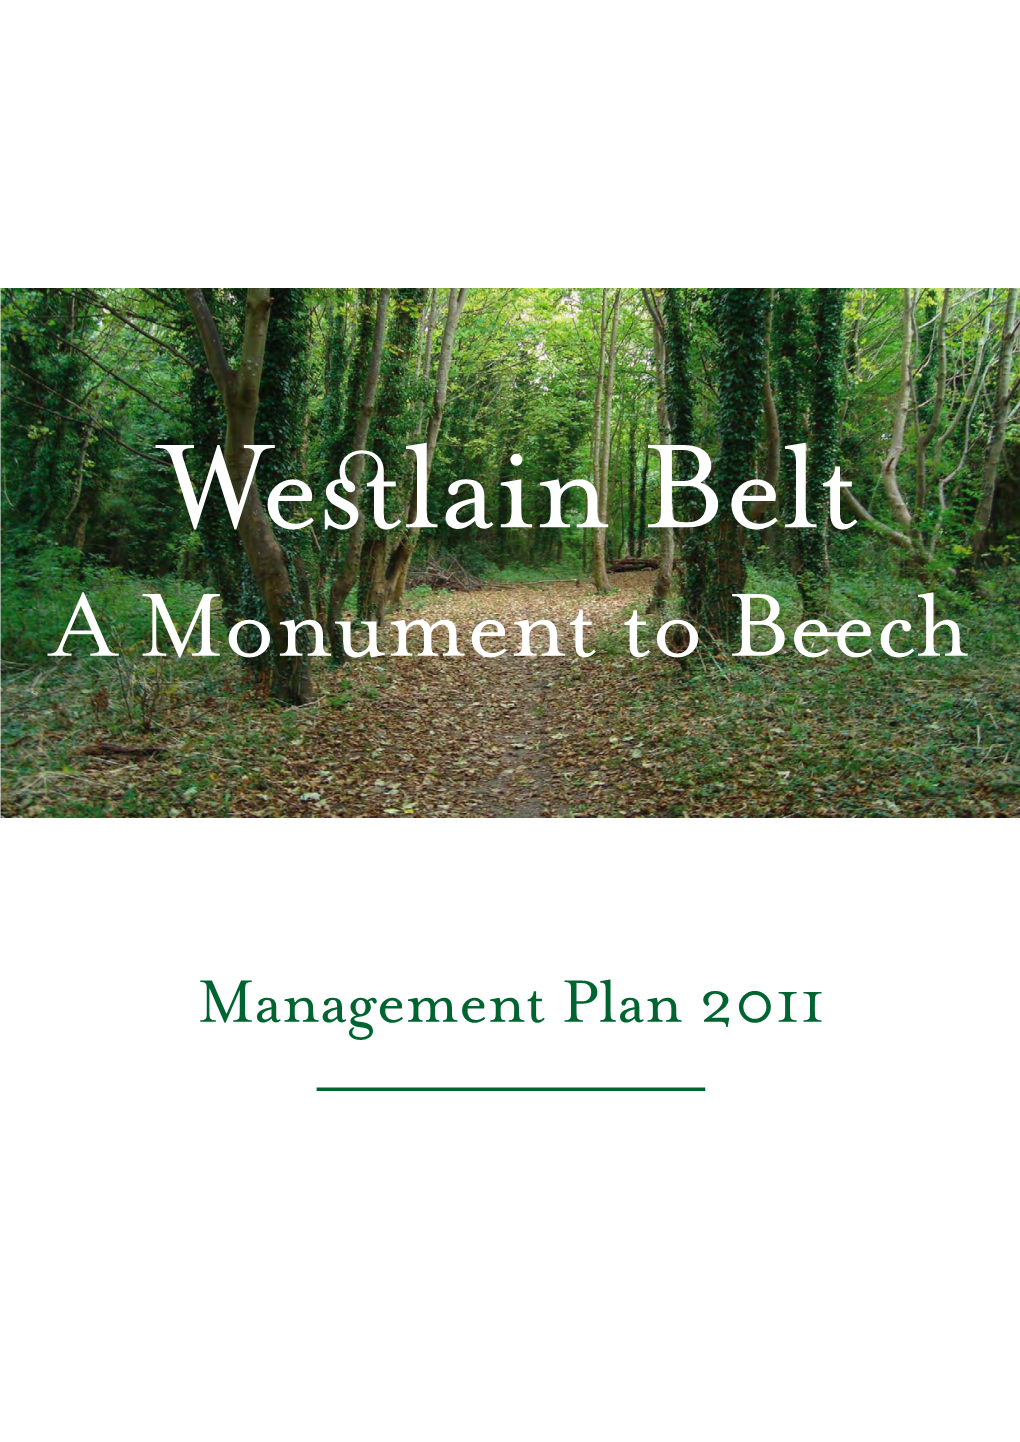 Westlain Belt Management Report 2011